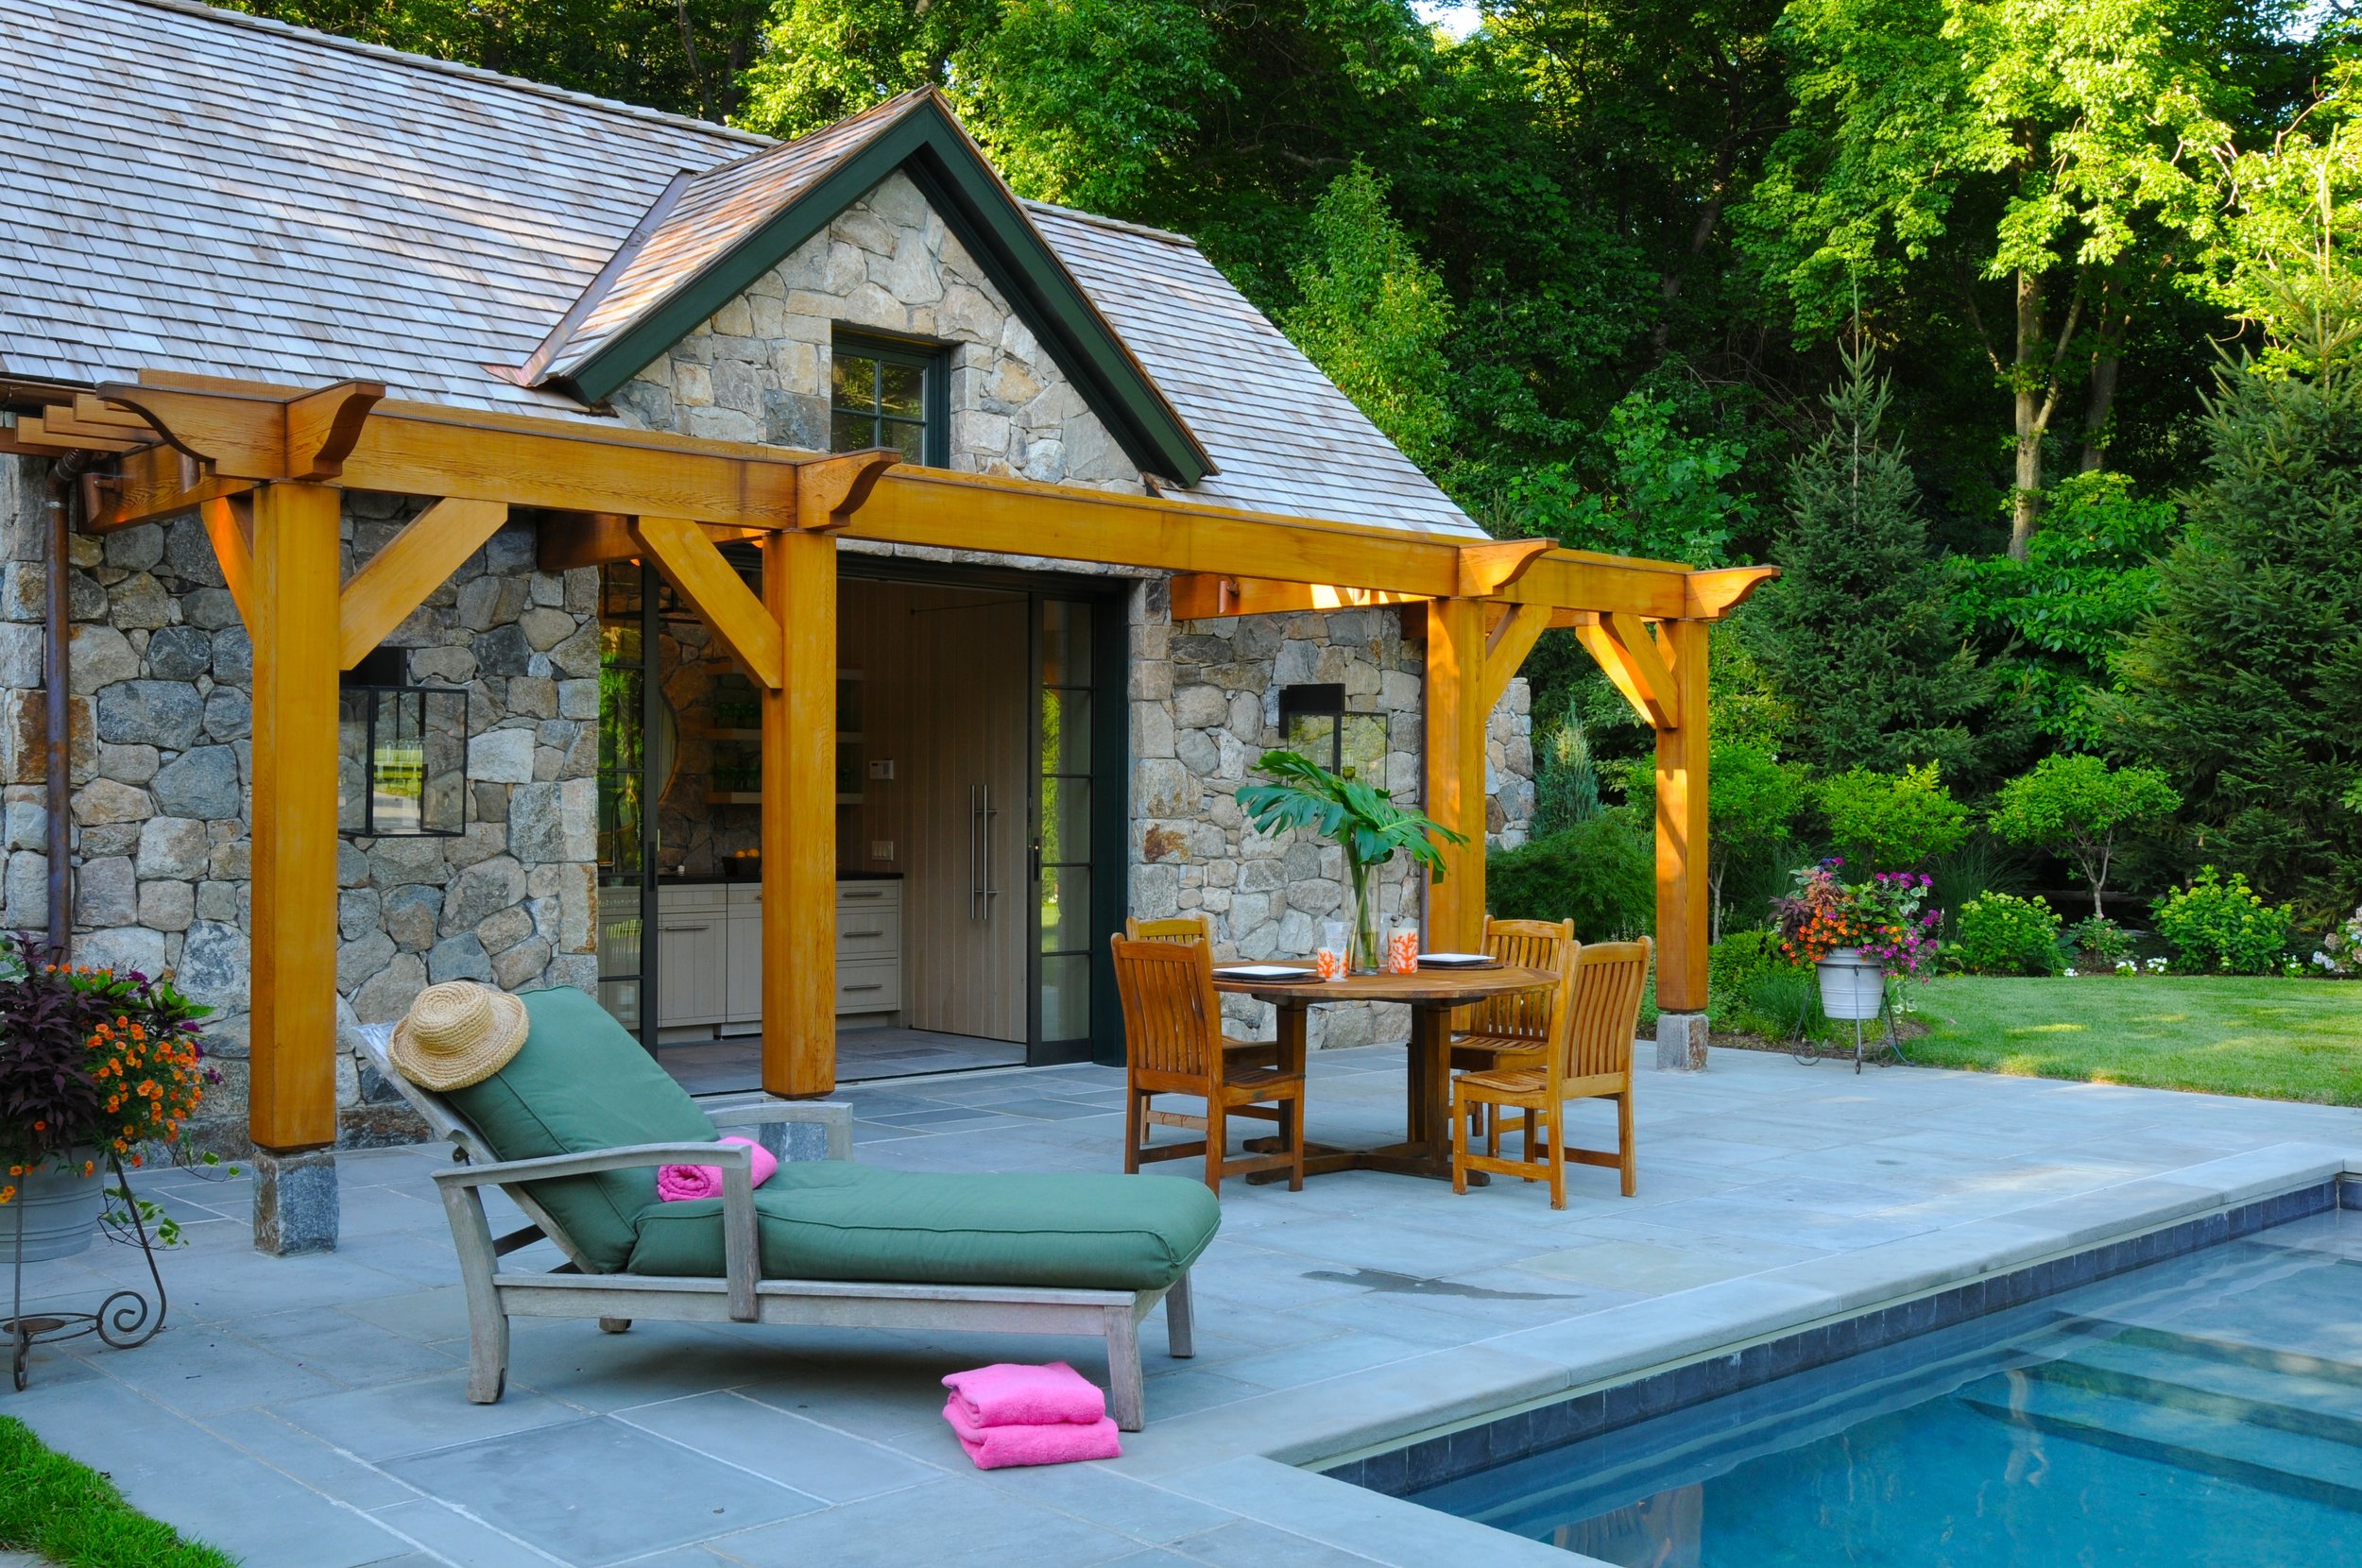 Fairy tale setting - pool and pool house